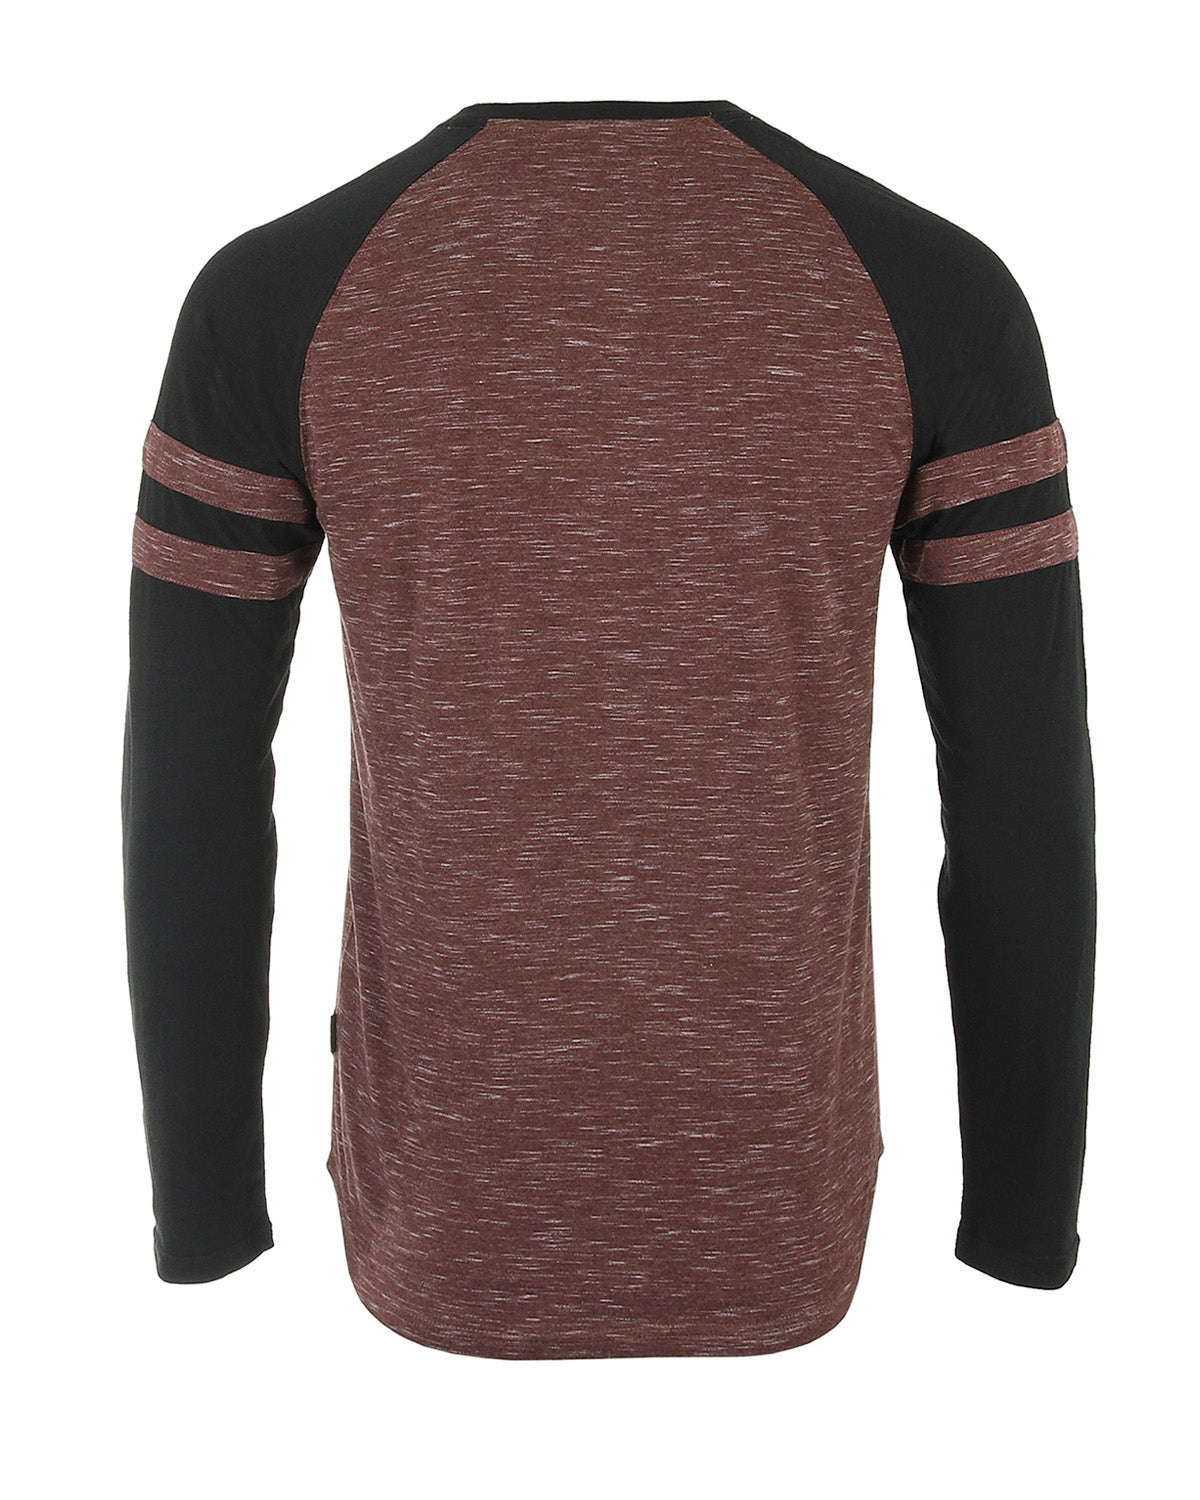 Men’s Casual Long Sleeve Baseball Raglan Athletic Fashion Henley Shirt